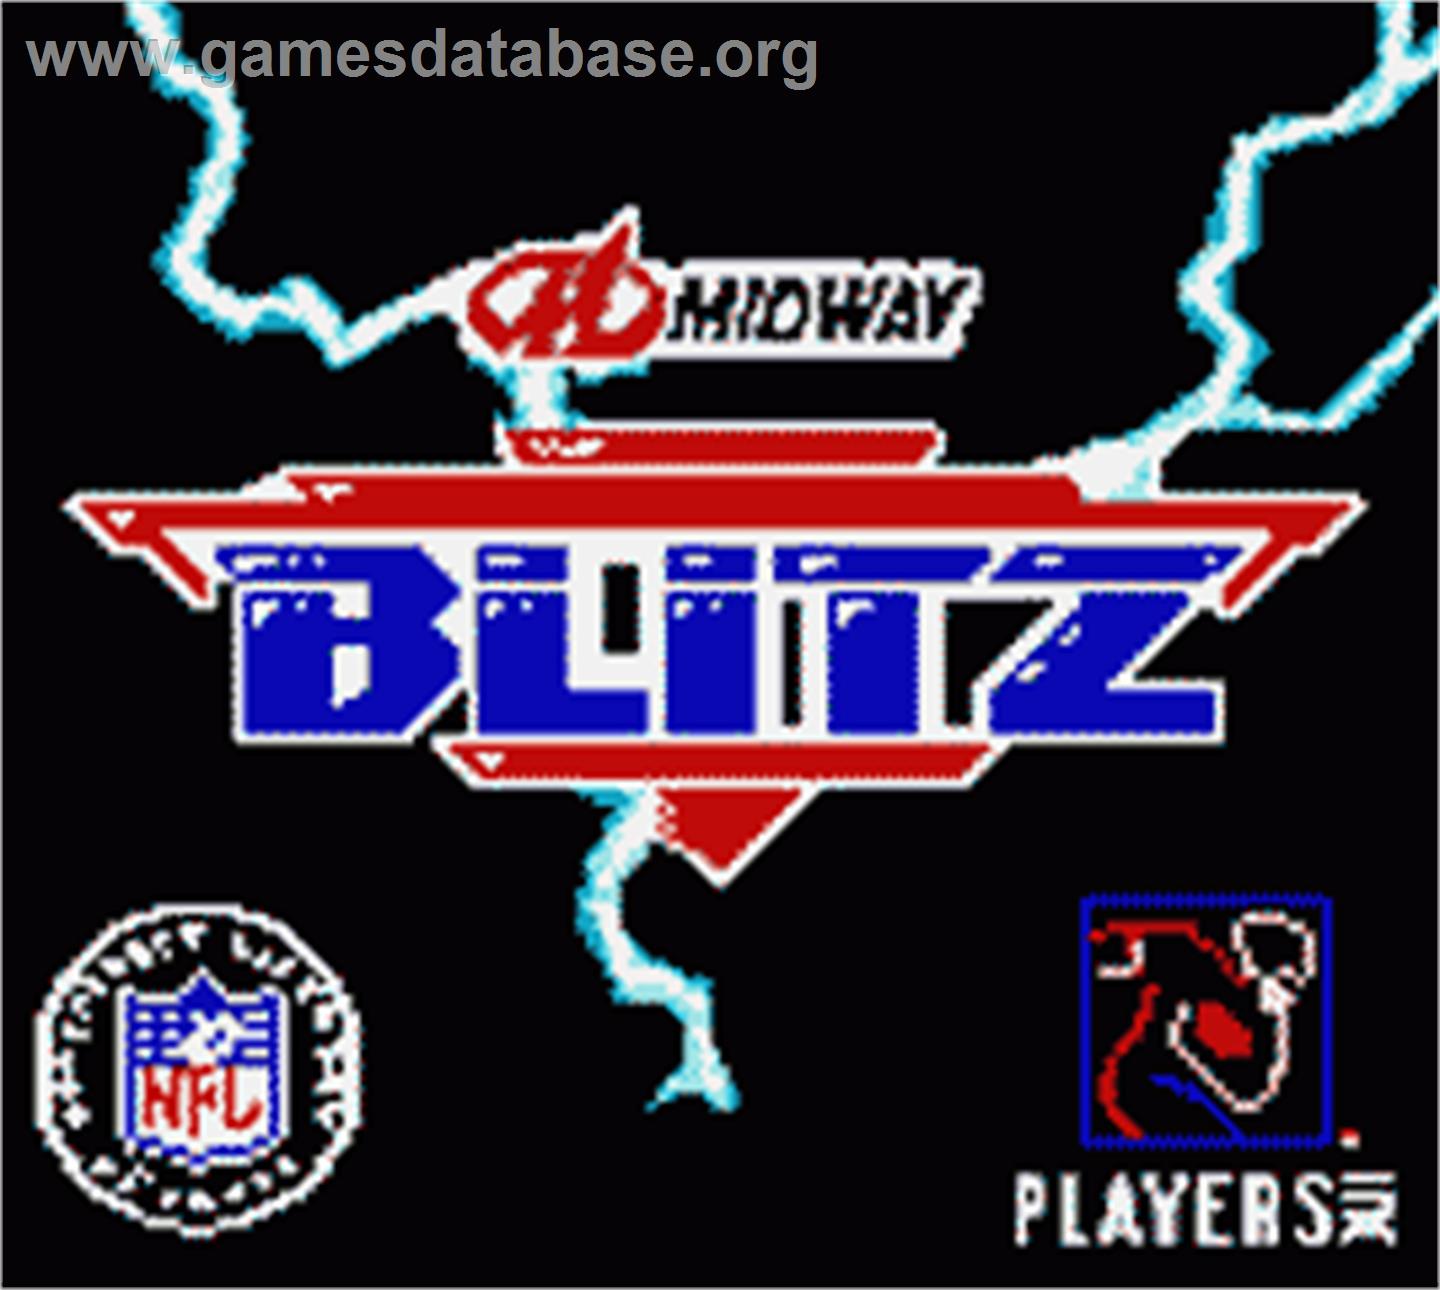 NFL Blitz - Nintendo Game Boy Color - Artwork - Title Screen